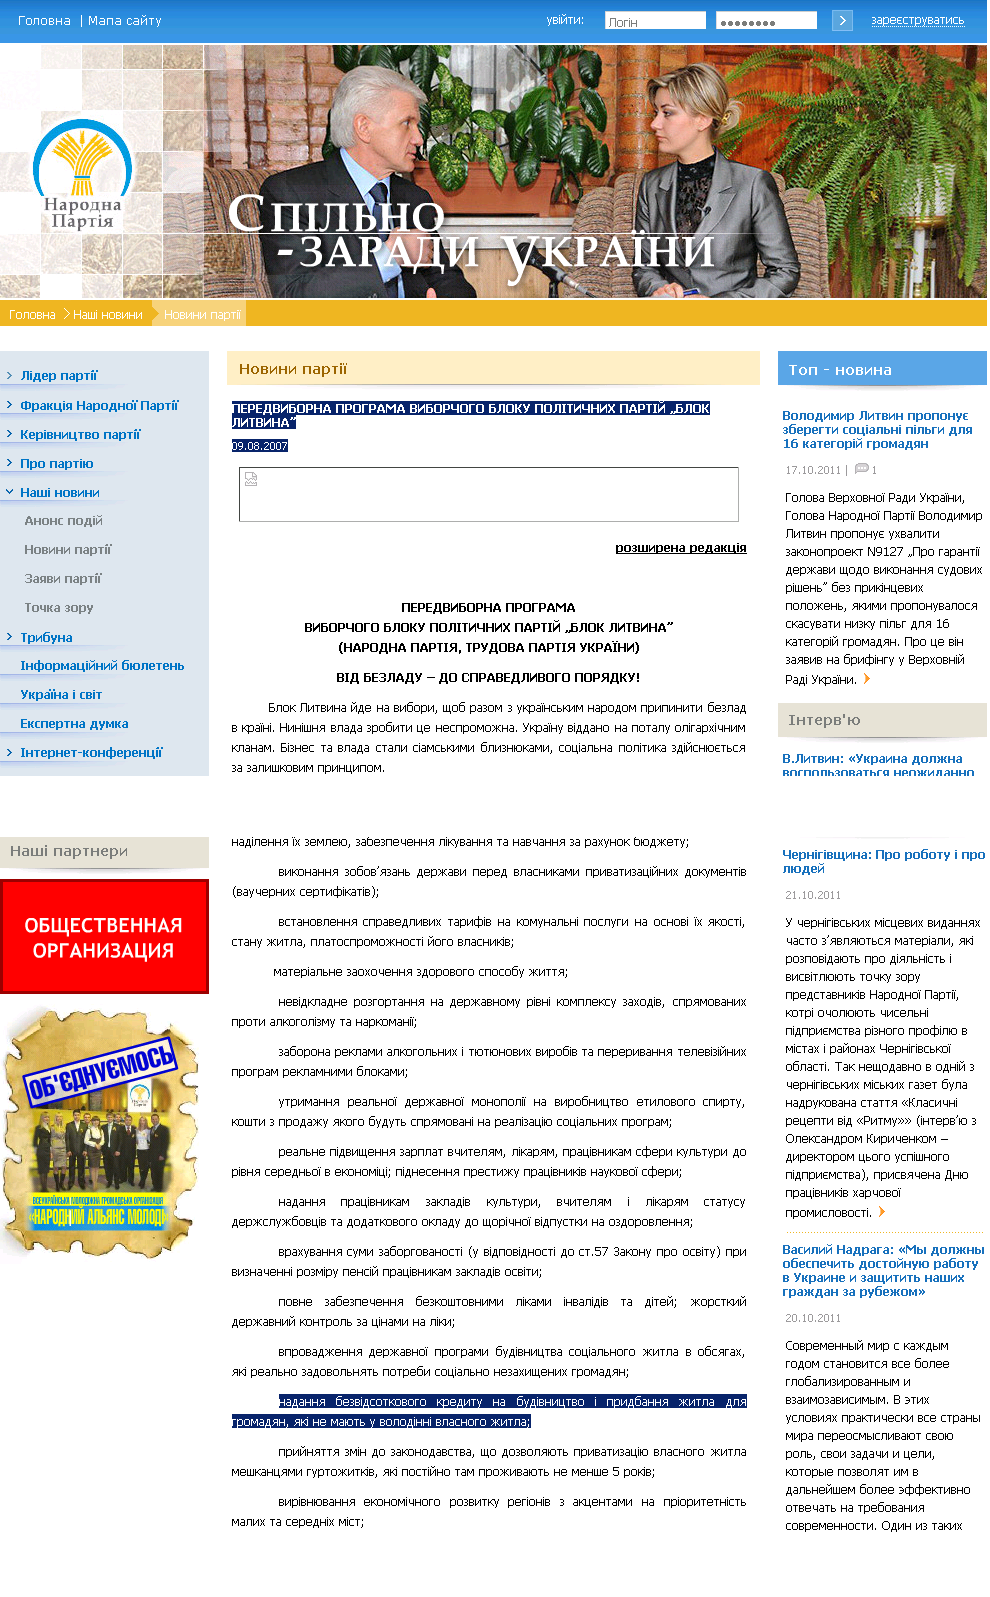 http://narodna.org.ua/news/2007/08/09/4349/